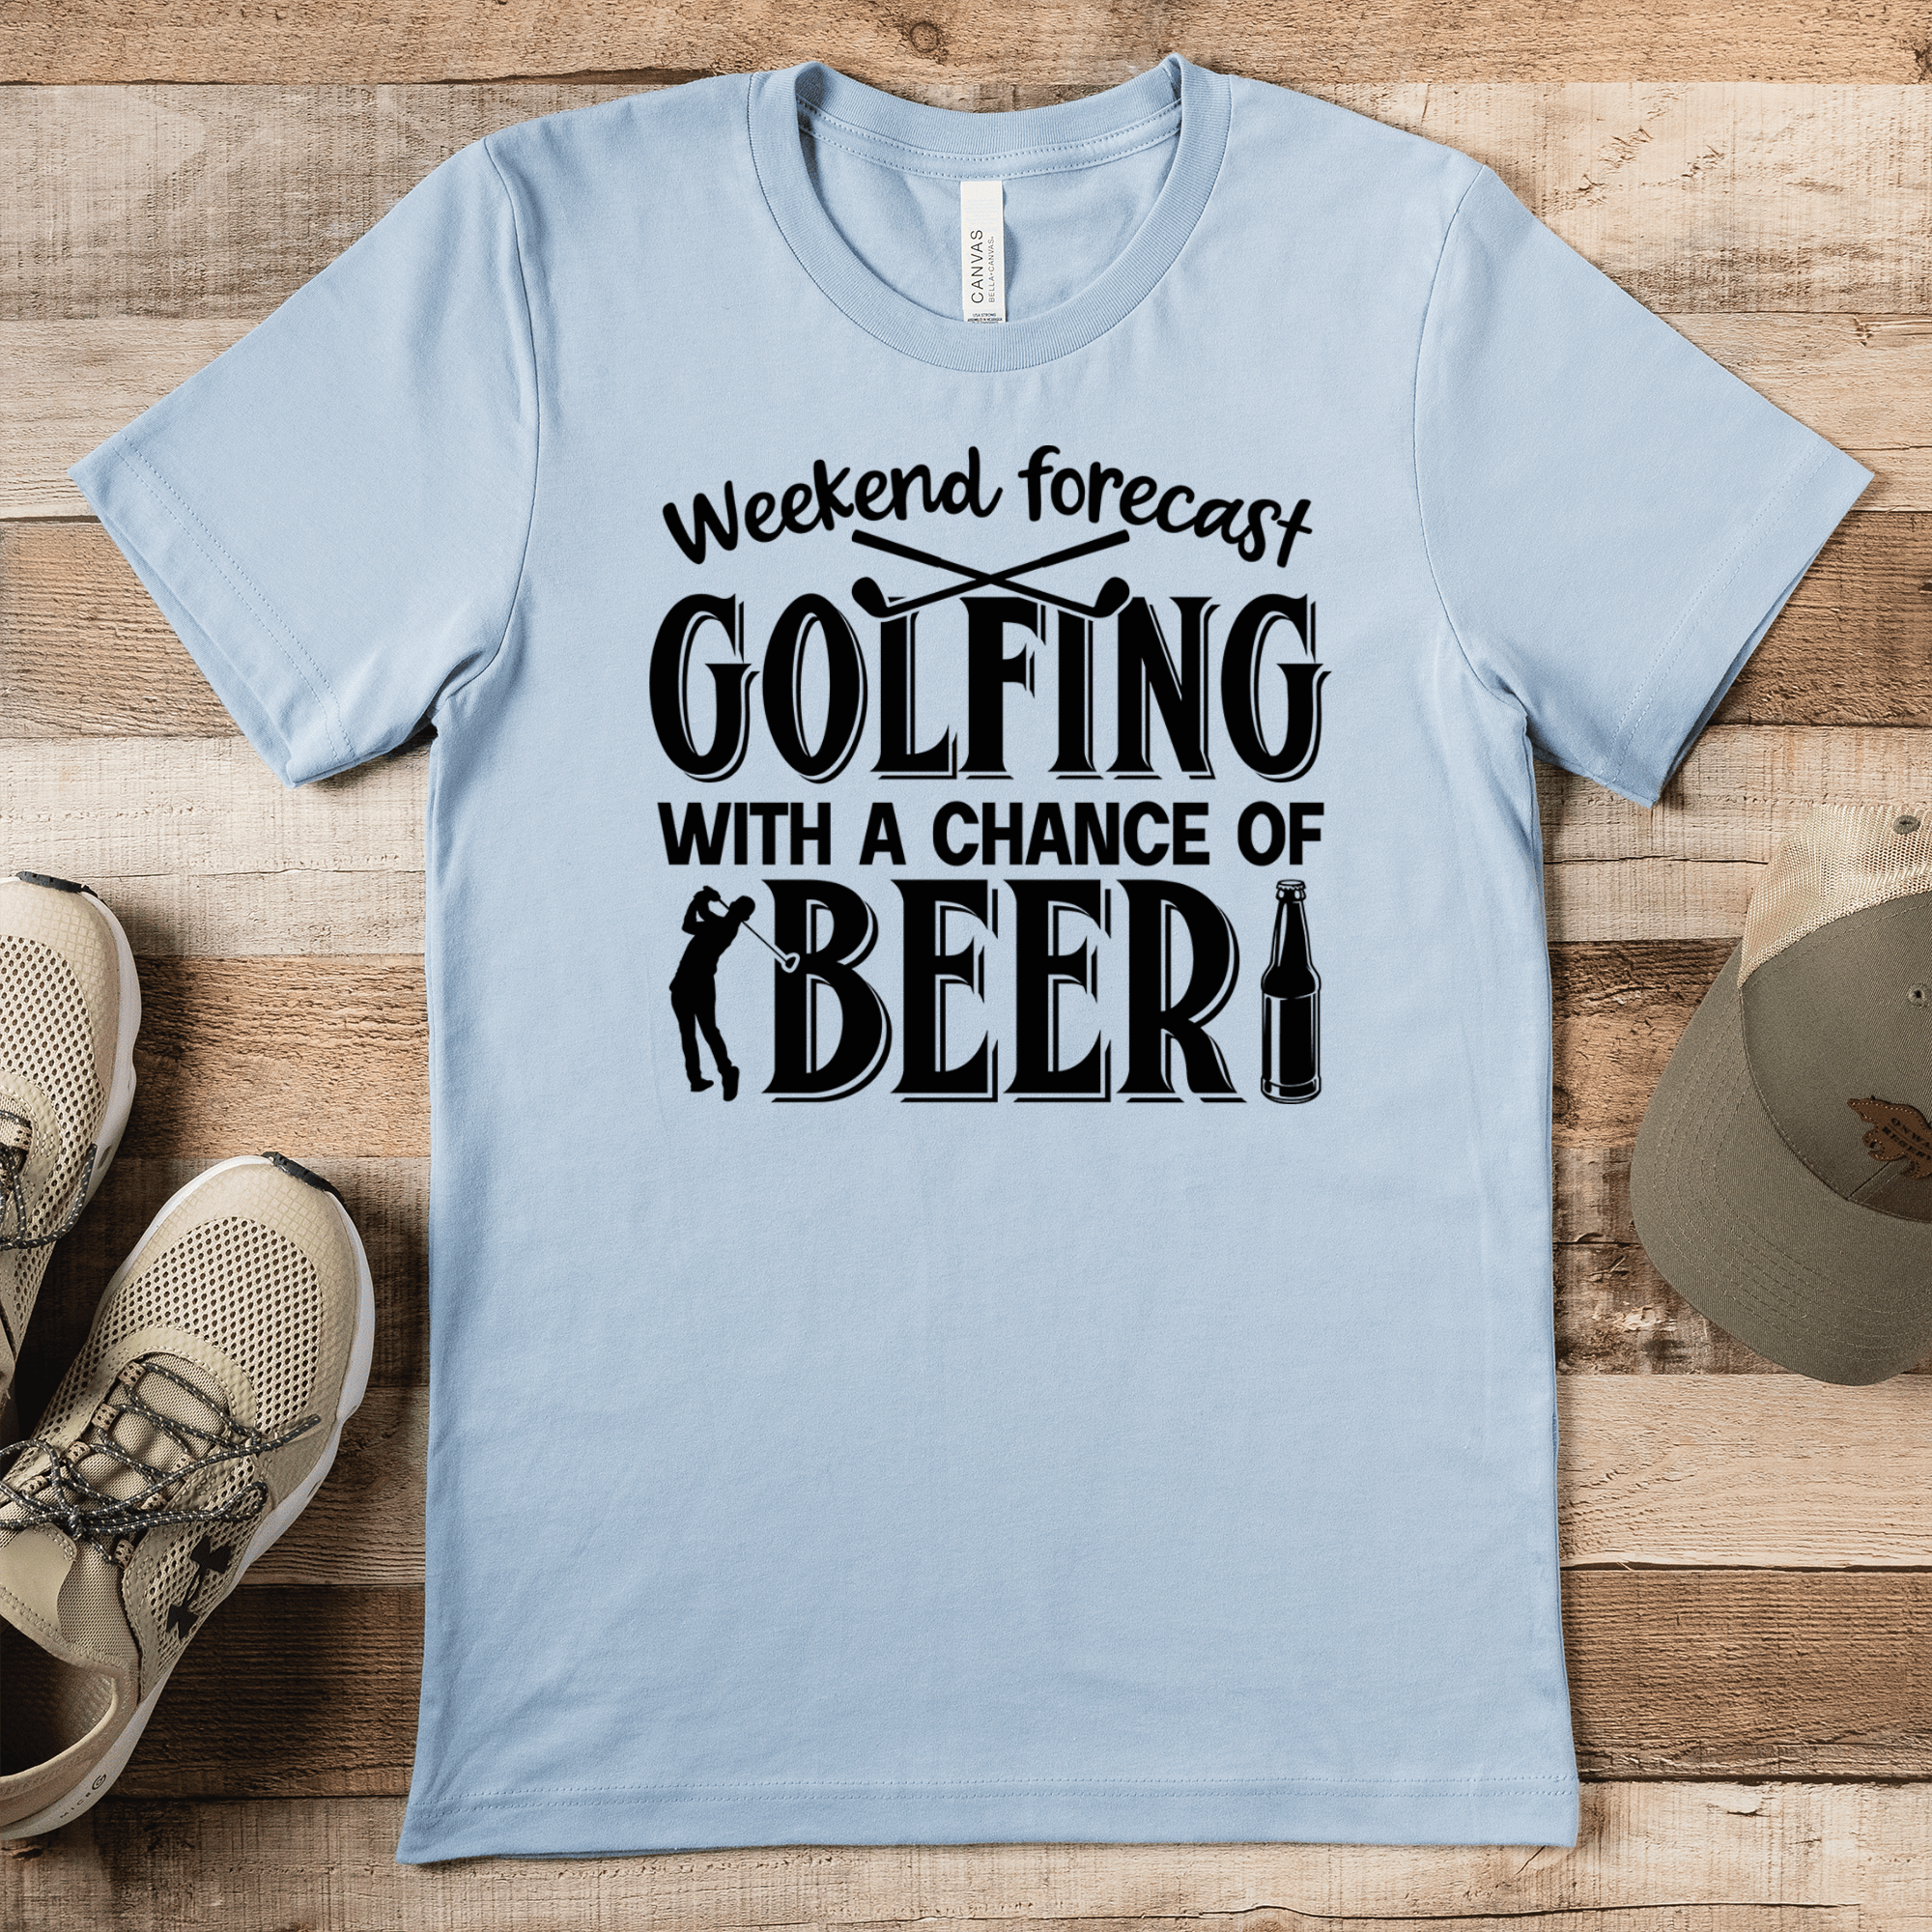 Golf Mens T-Shirt With Weekend Forecast Golfing Design - Groovy Golfer